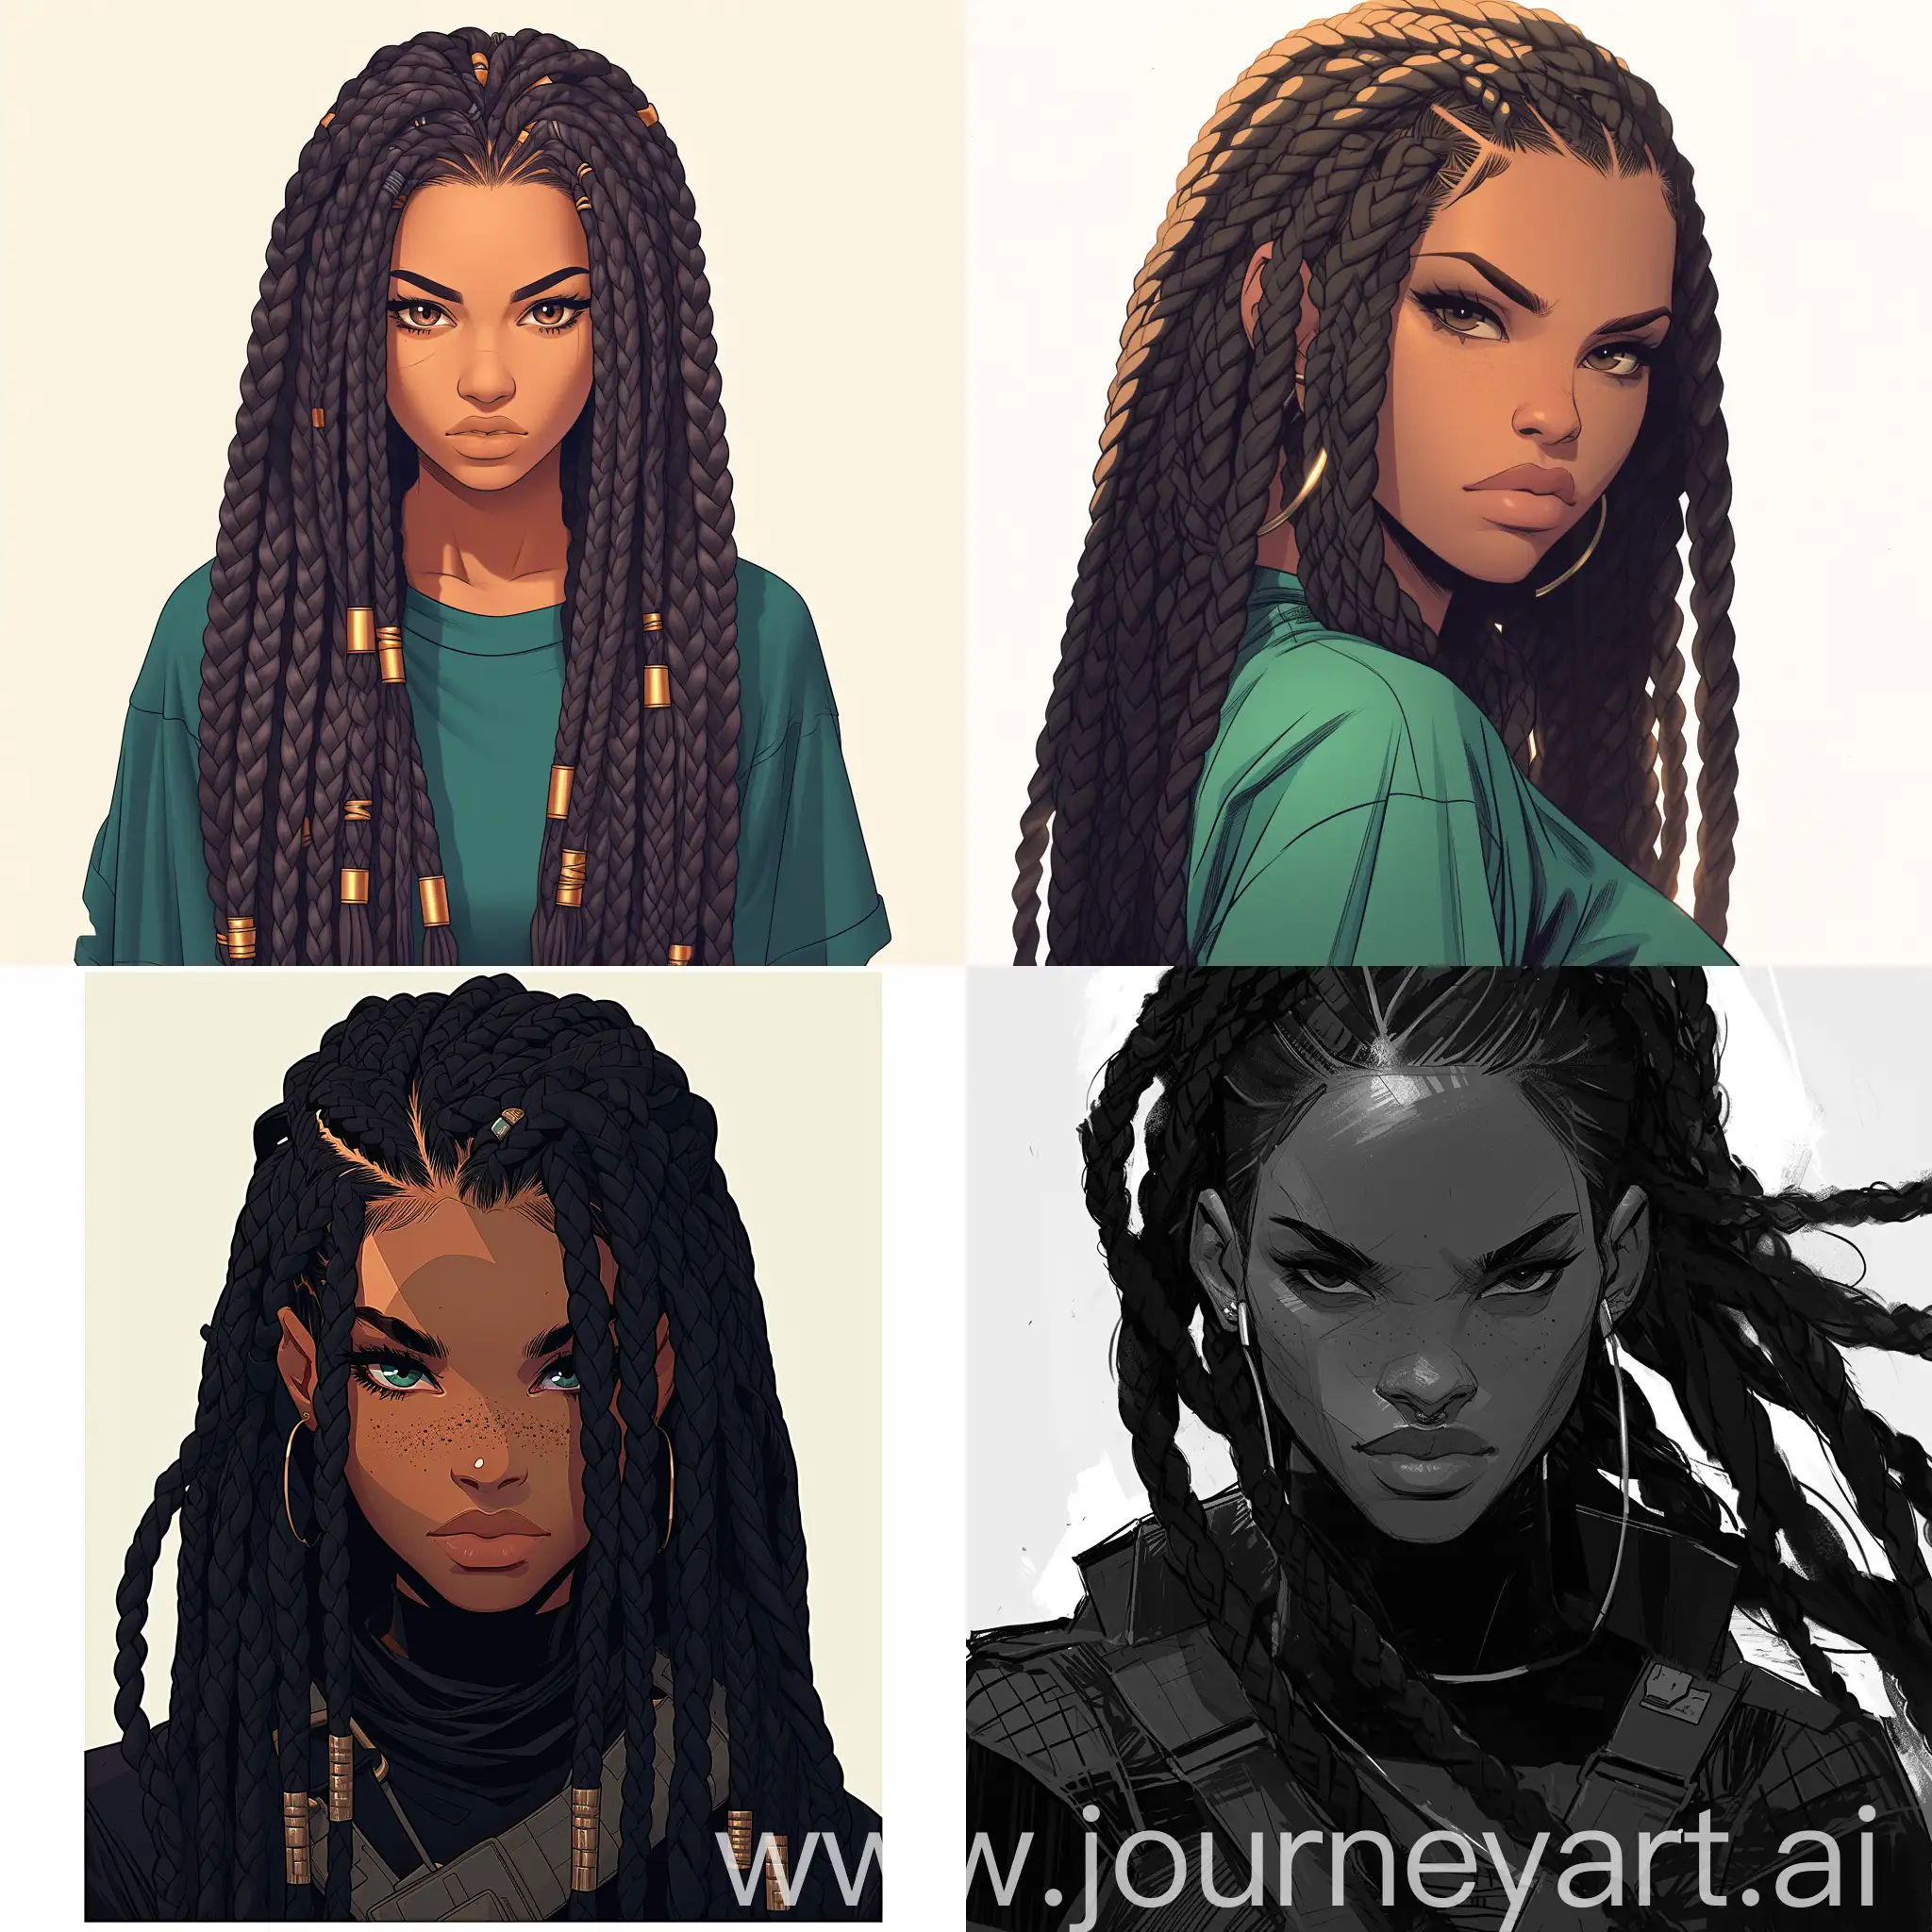 Hyperrealistic-Fantasy-Art-of-a-Black-Female-with-Box-Braids